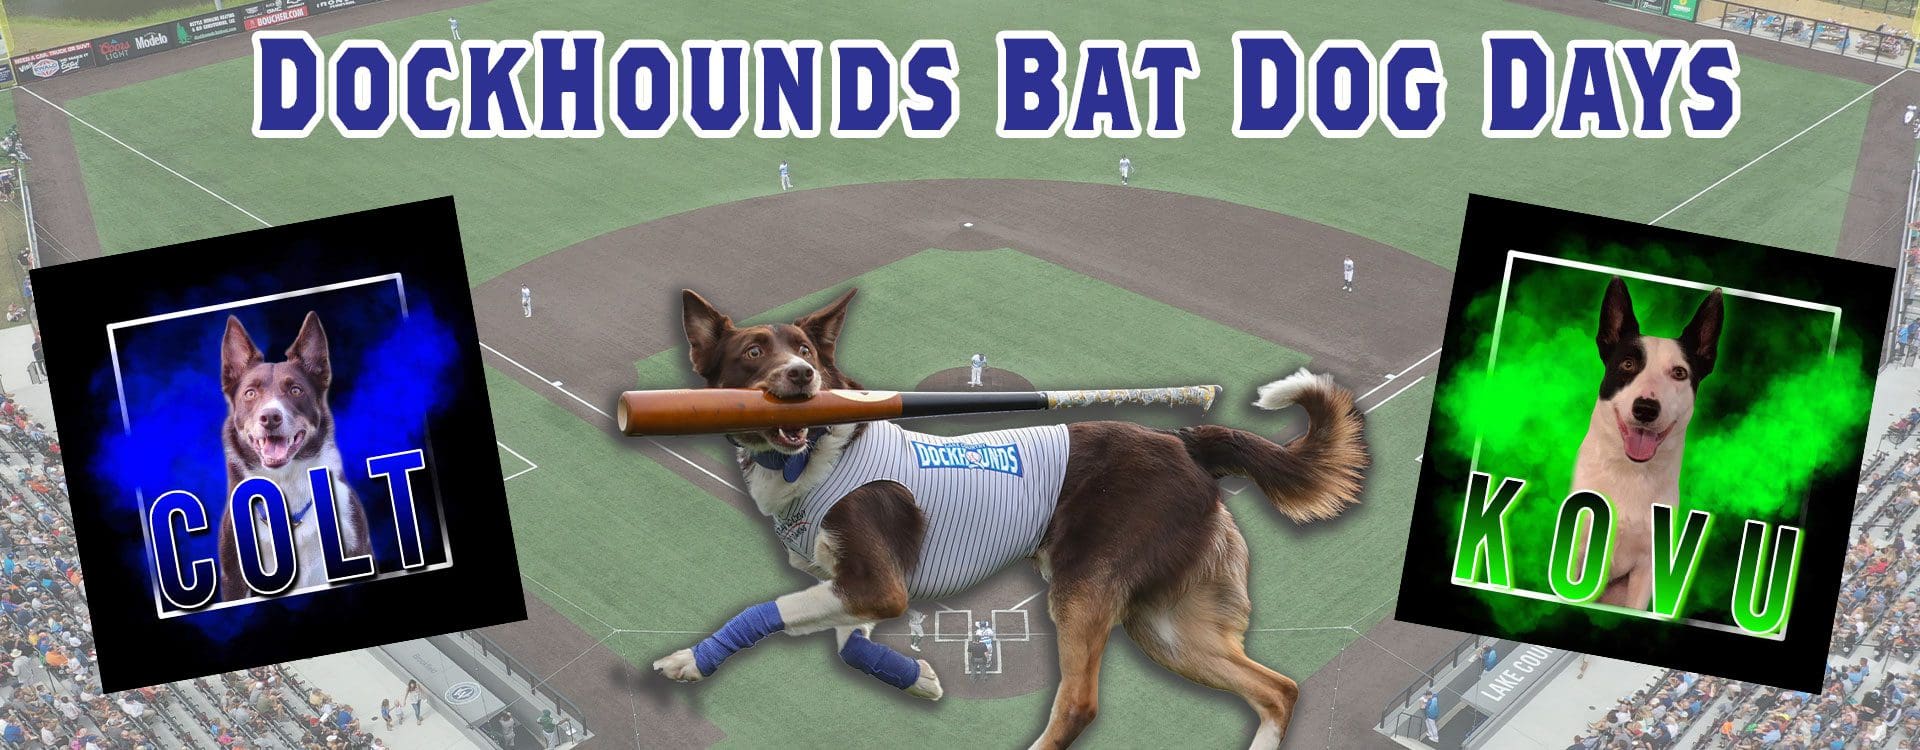 DockHounds bat dogs, Colt and Kovu 2023 appearance schedule